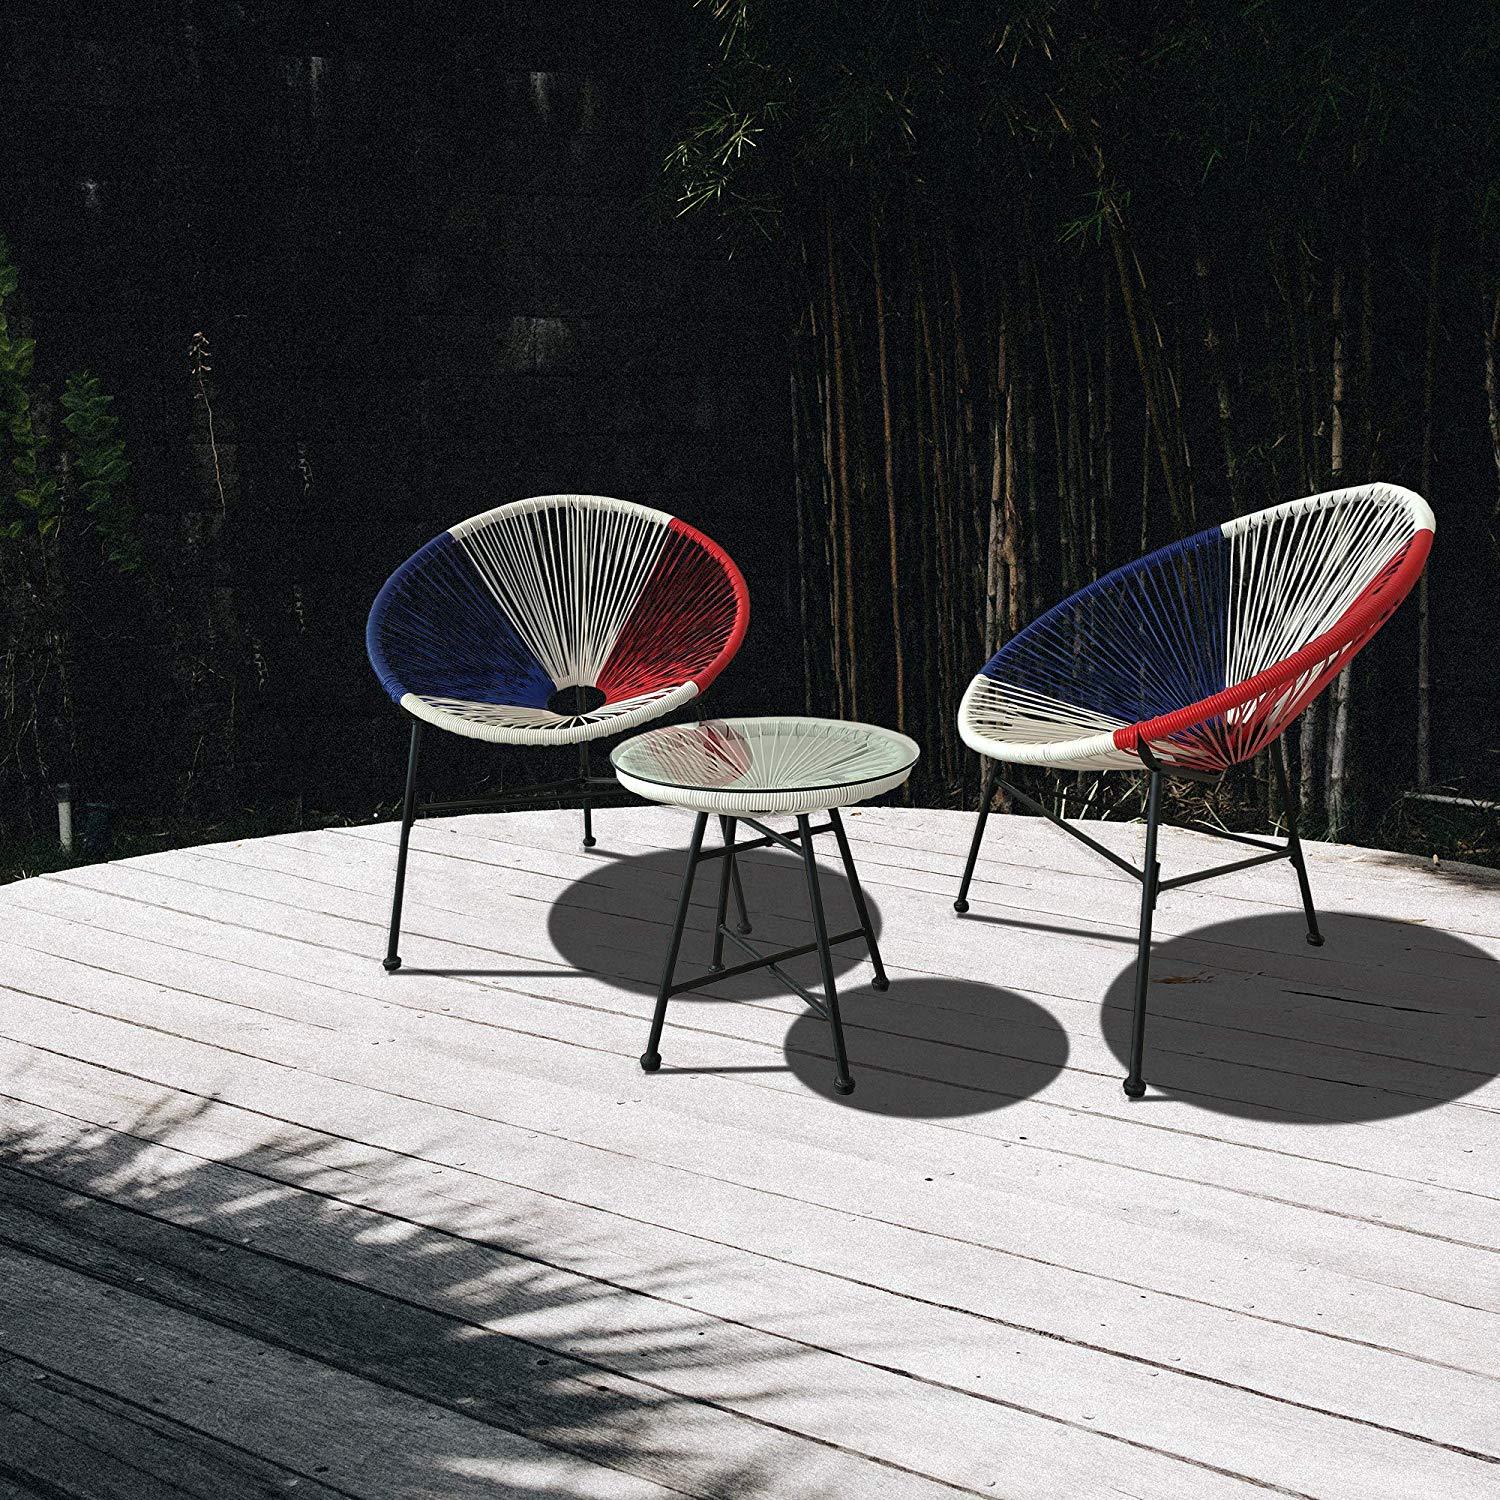 Cherry Tree Furniture Konya 2 Seater String Rattan Bistro Table and Chairs Set Garden Furniture Set Multi